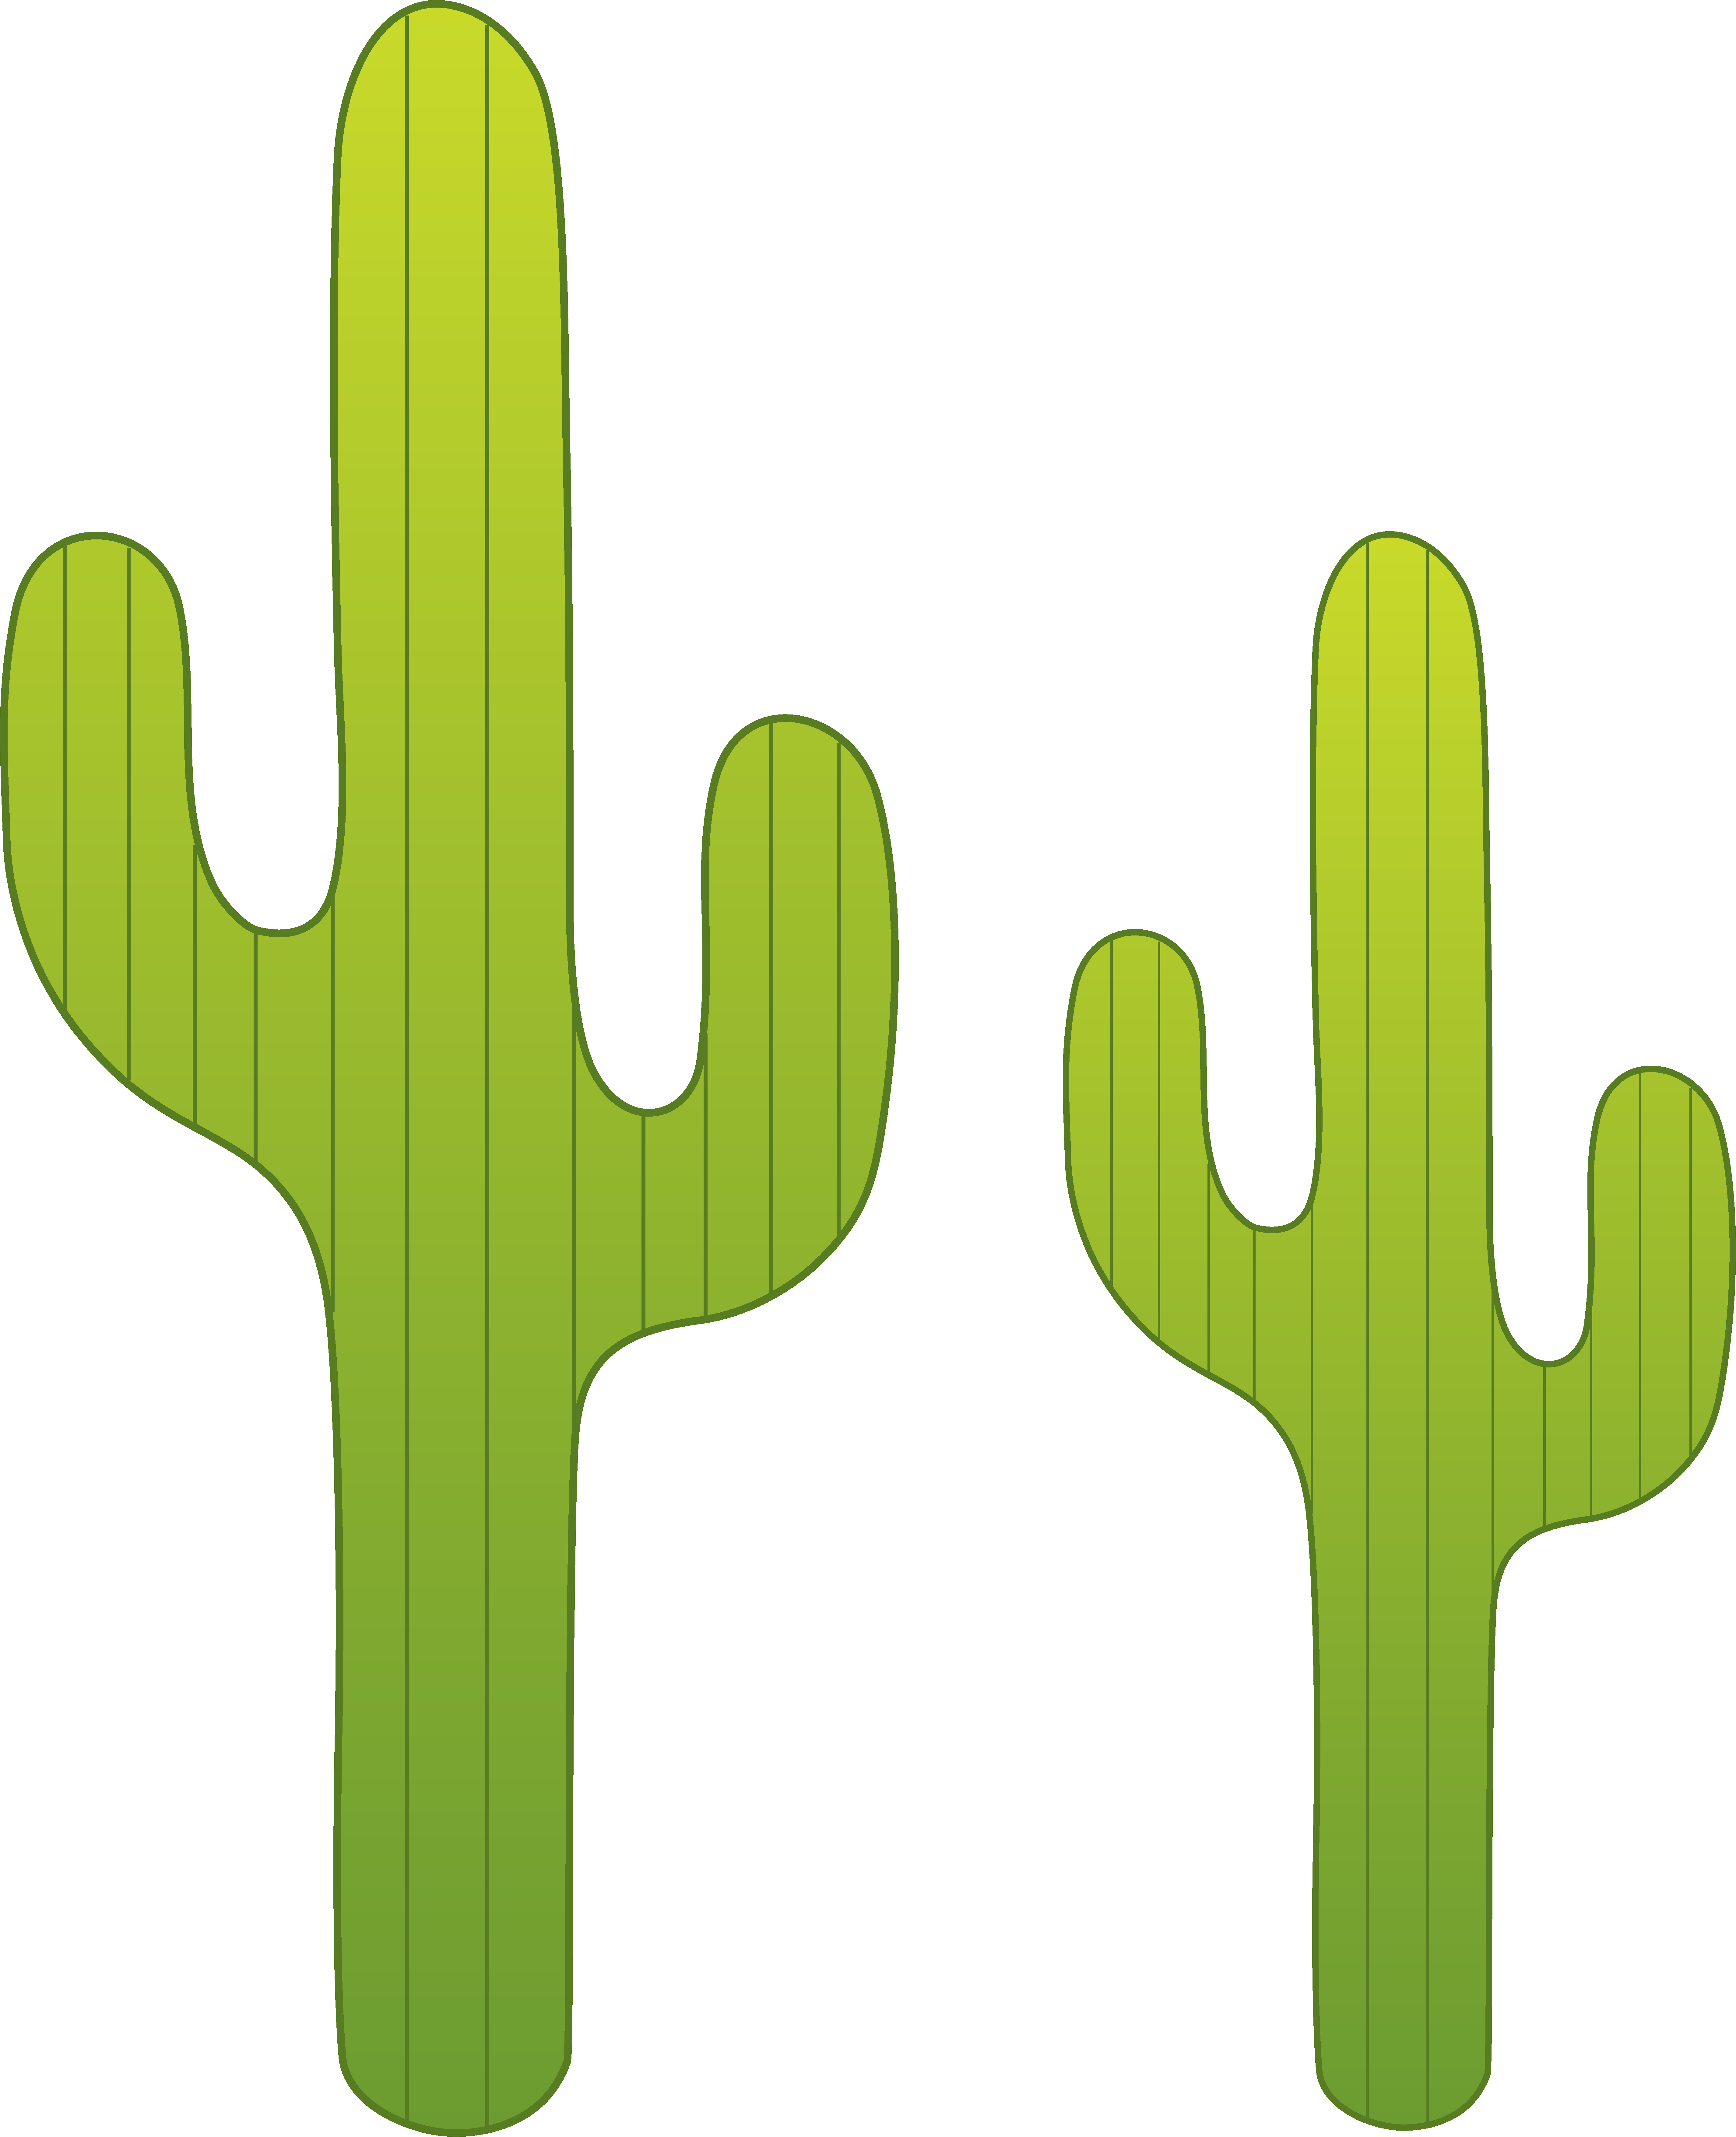 Cactus Cartoon Images | Free Download Clip Art | Free Clip Art ...